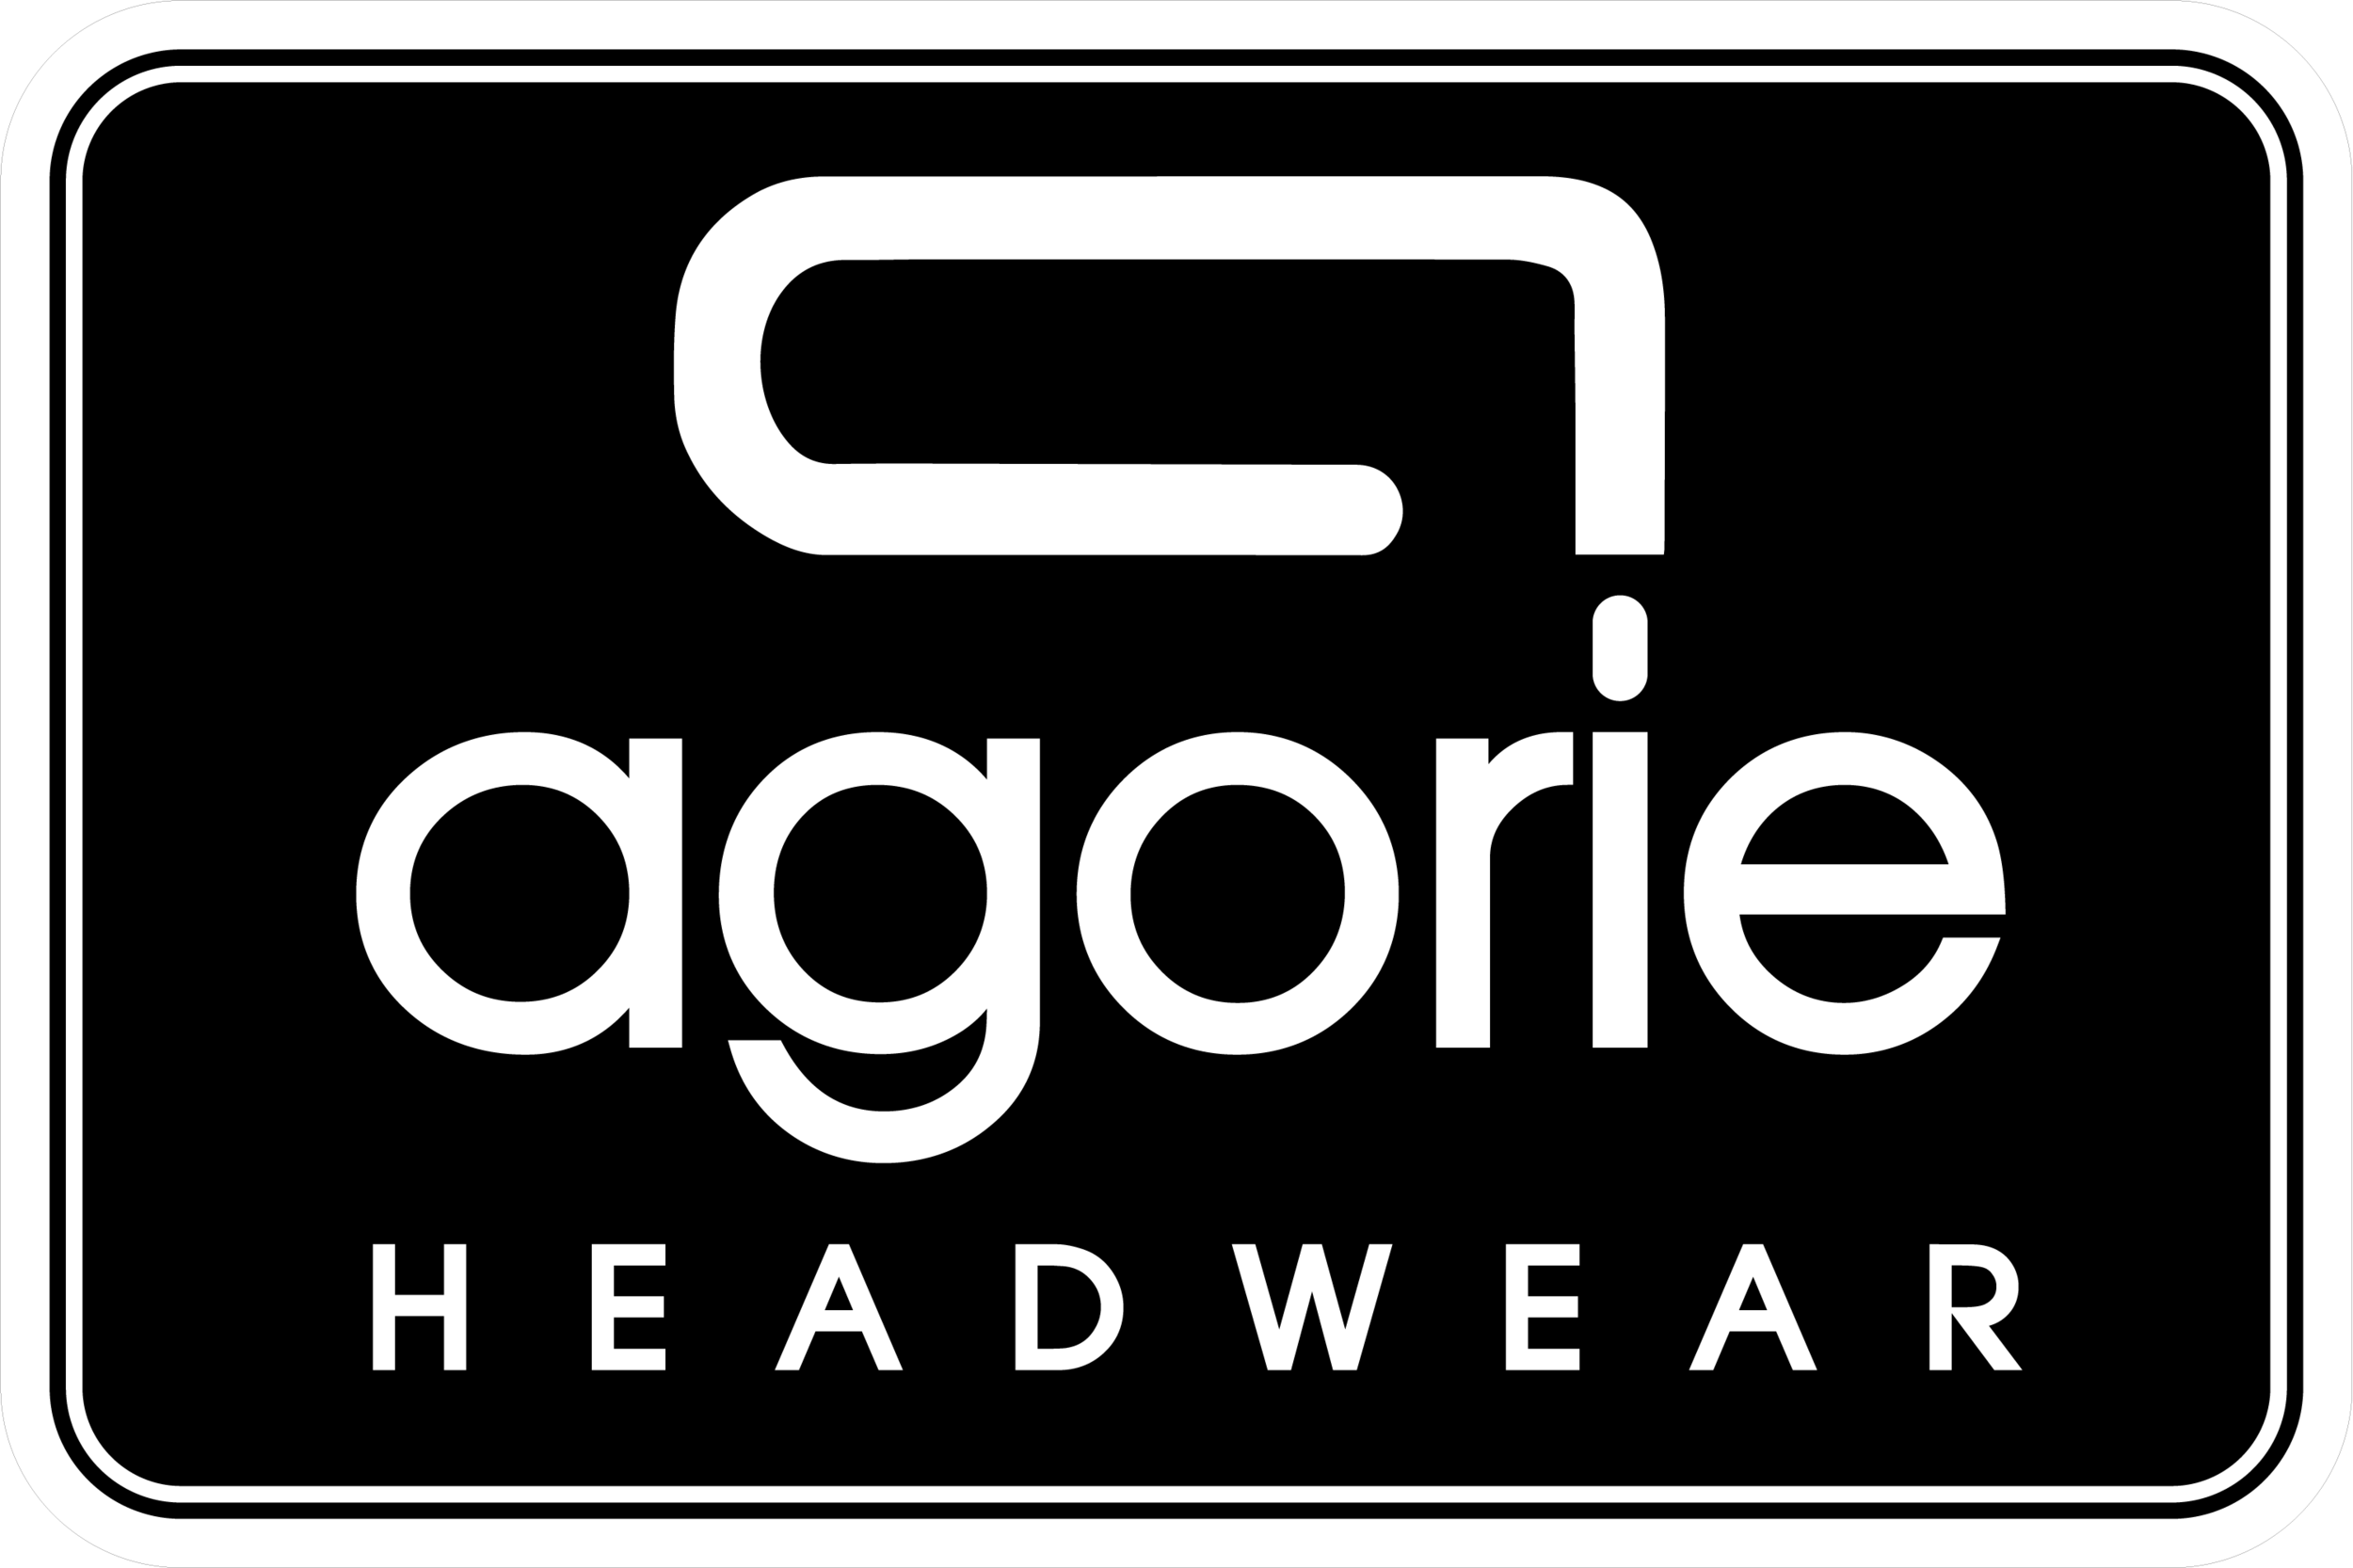 Agorie Headwear